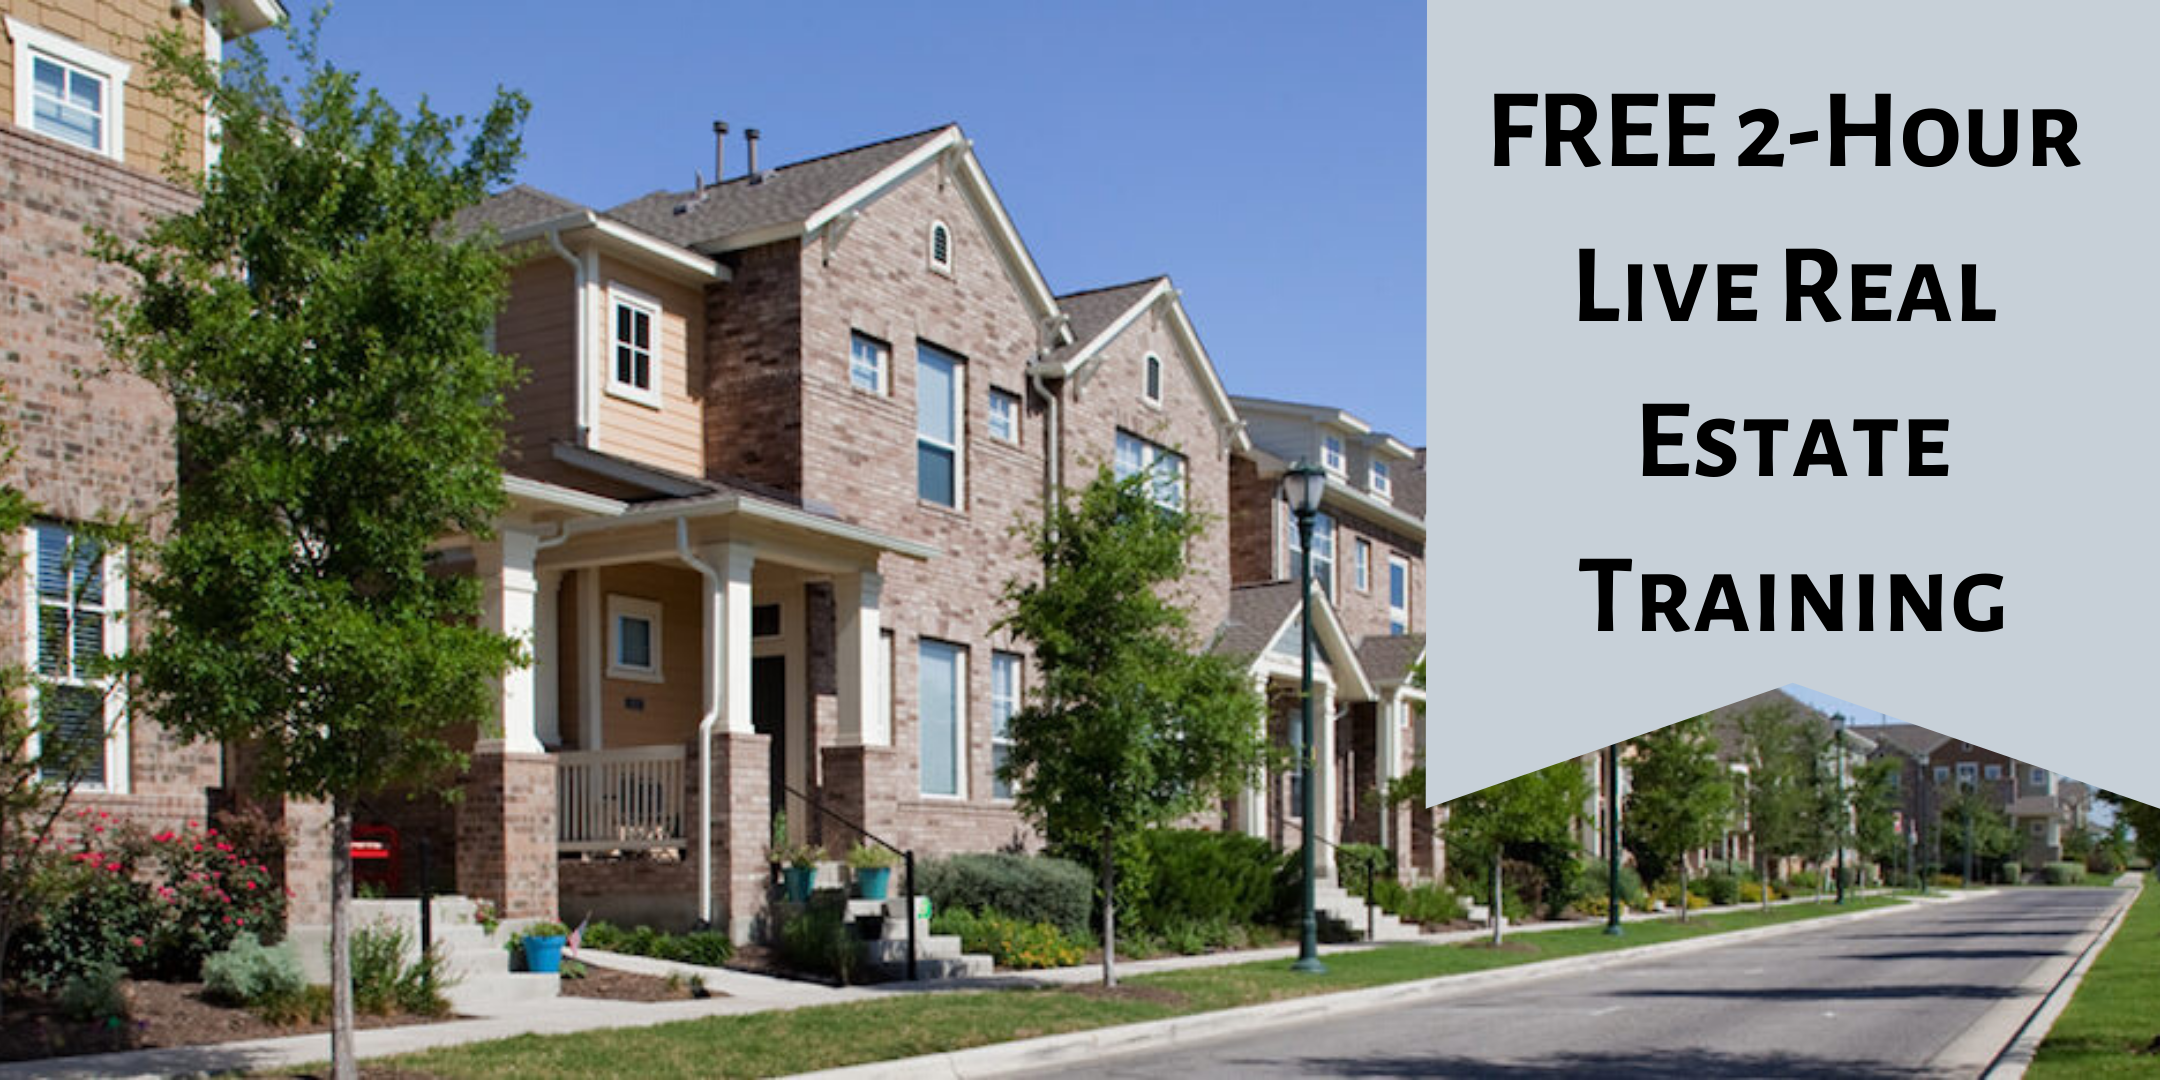 FREE 2-Hour Live Real Estate Training - Redmond, WA